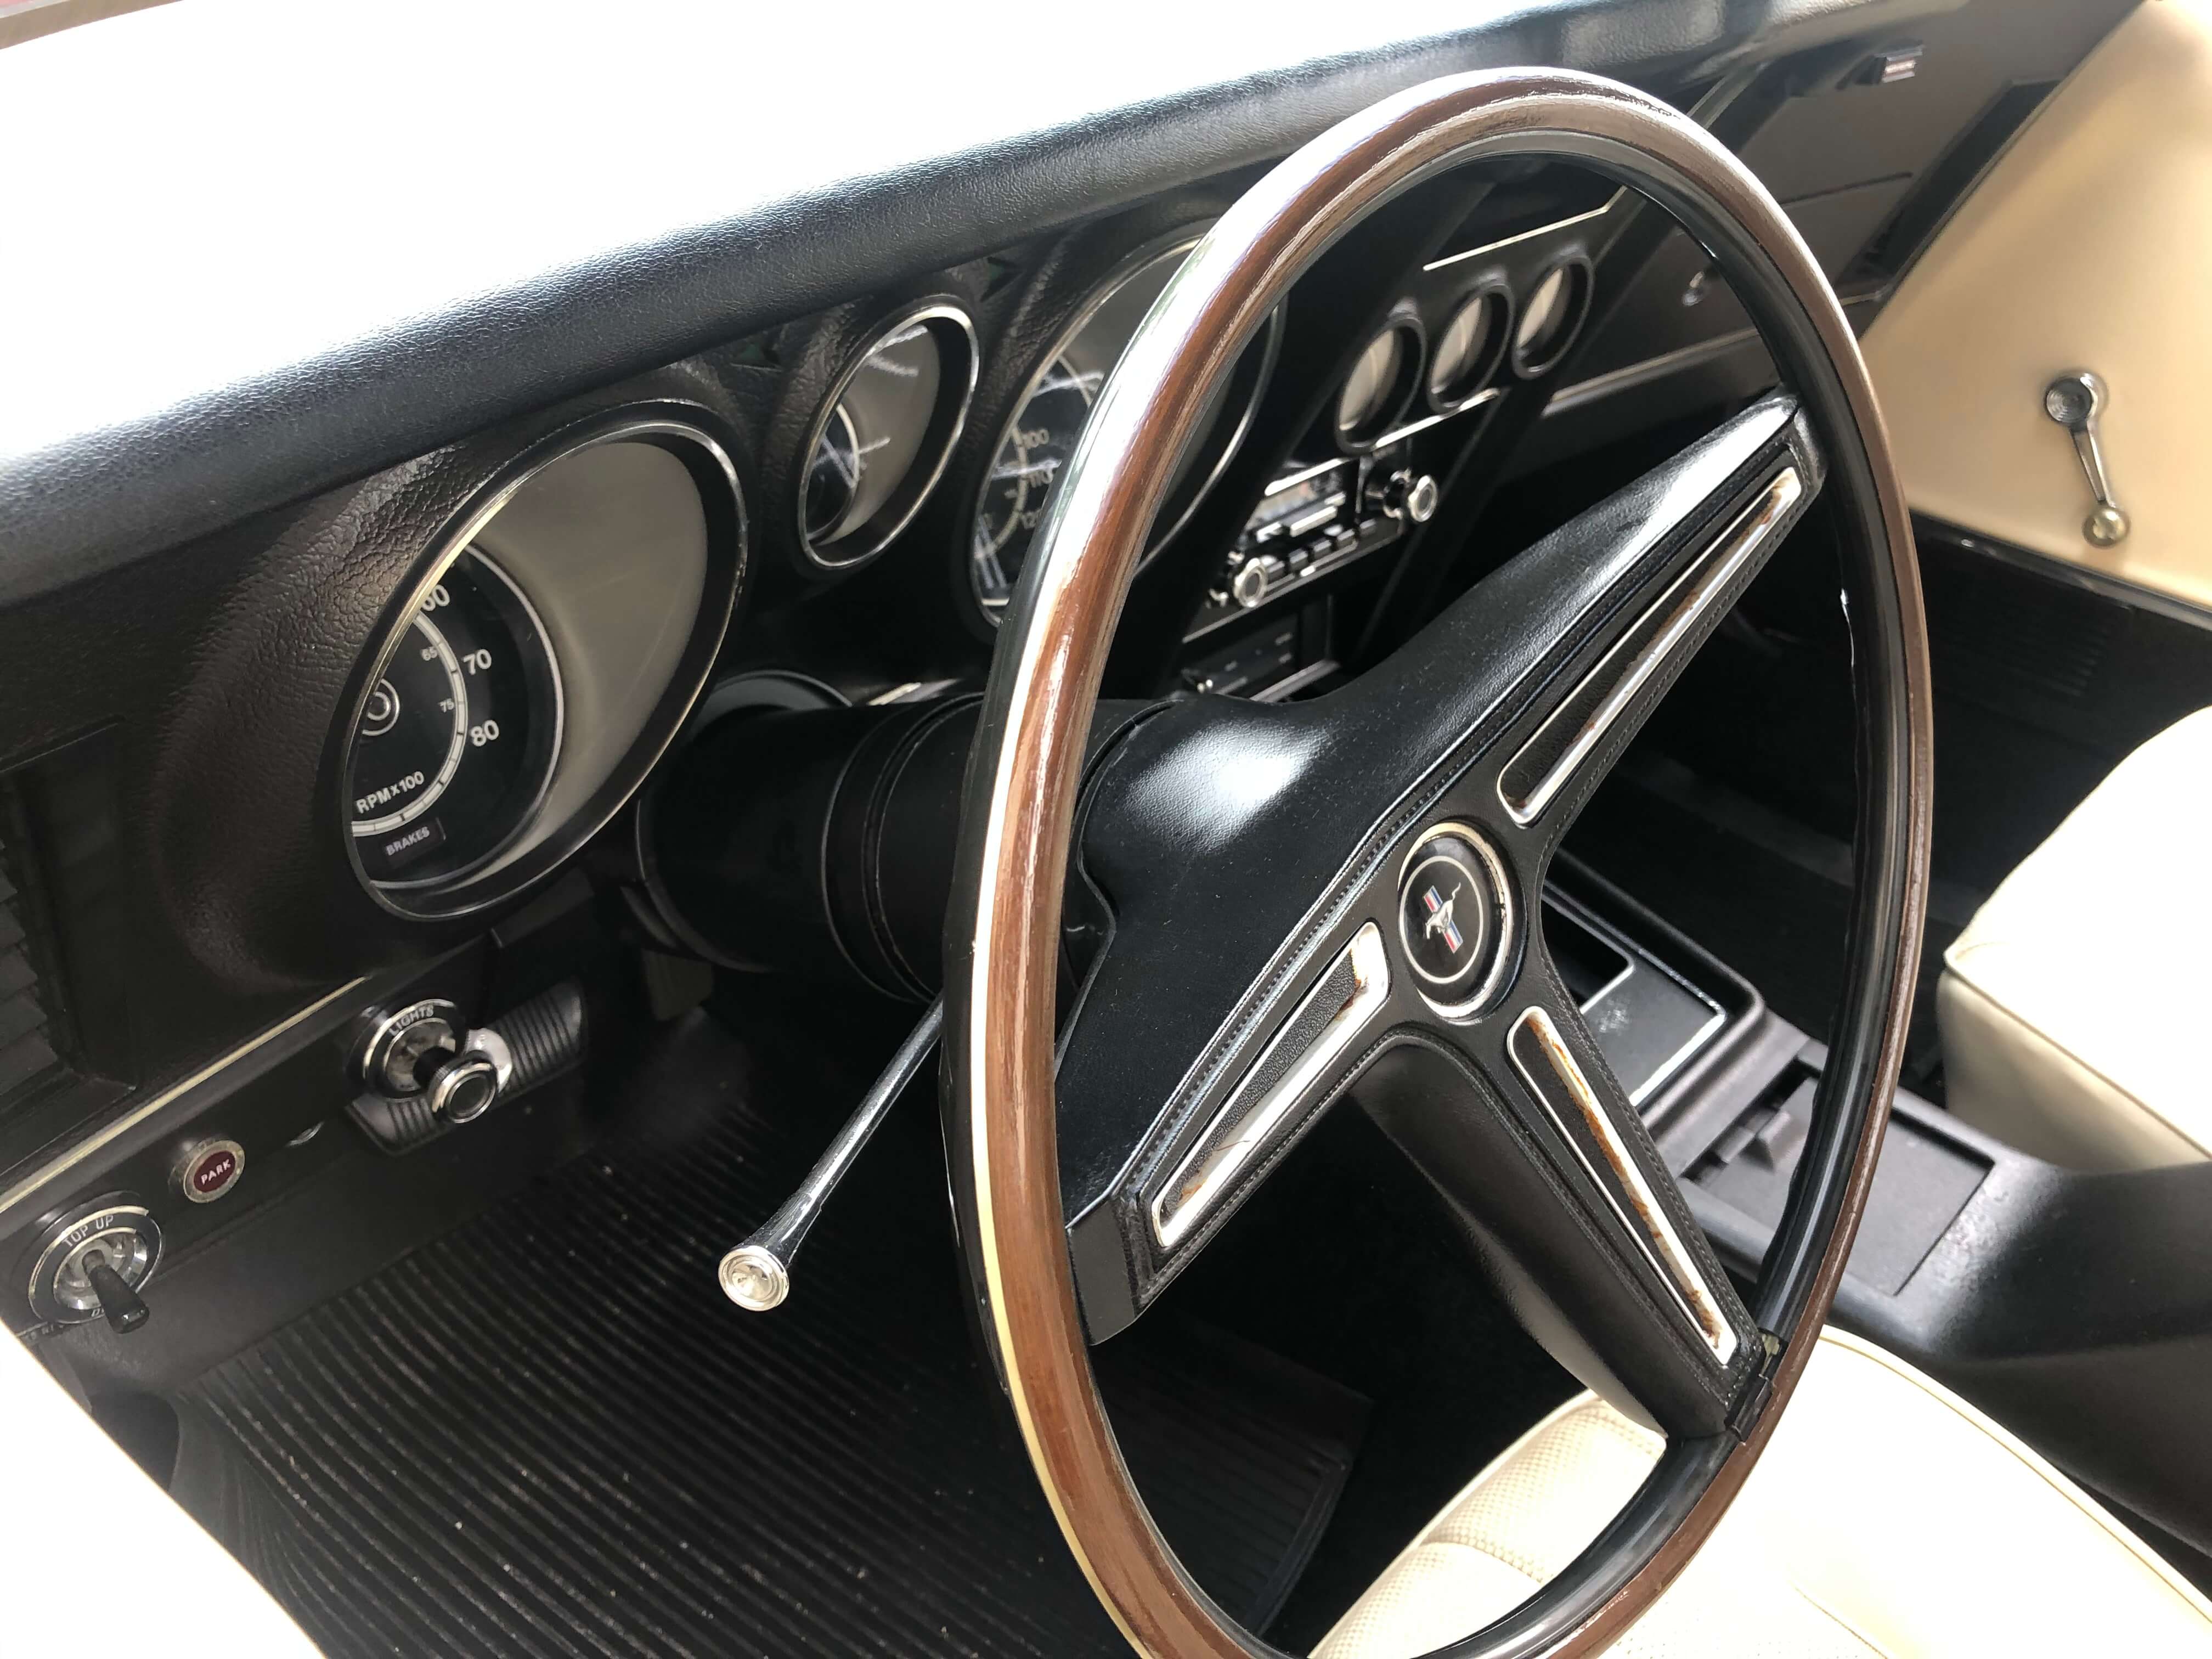 1973 Ford Mustang Convertible steering wheel